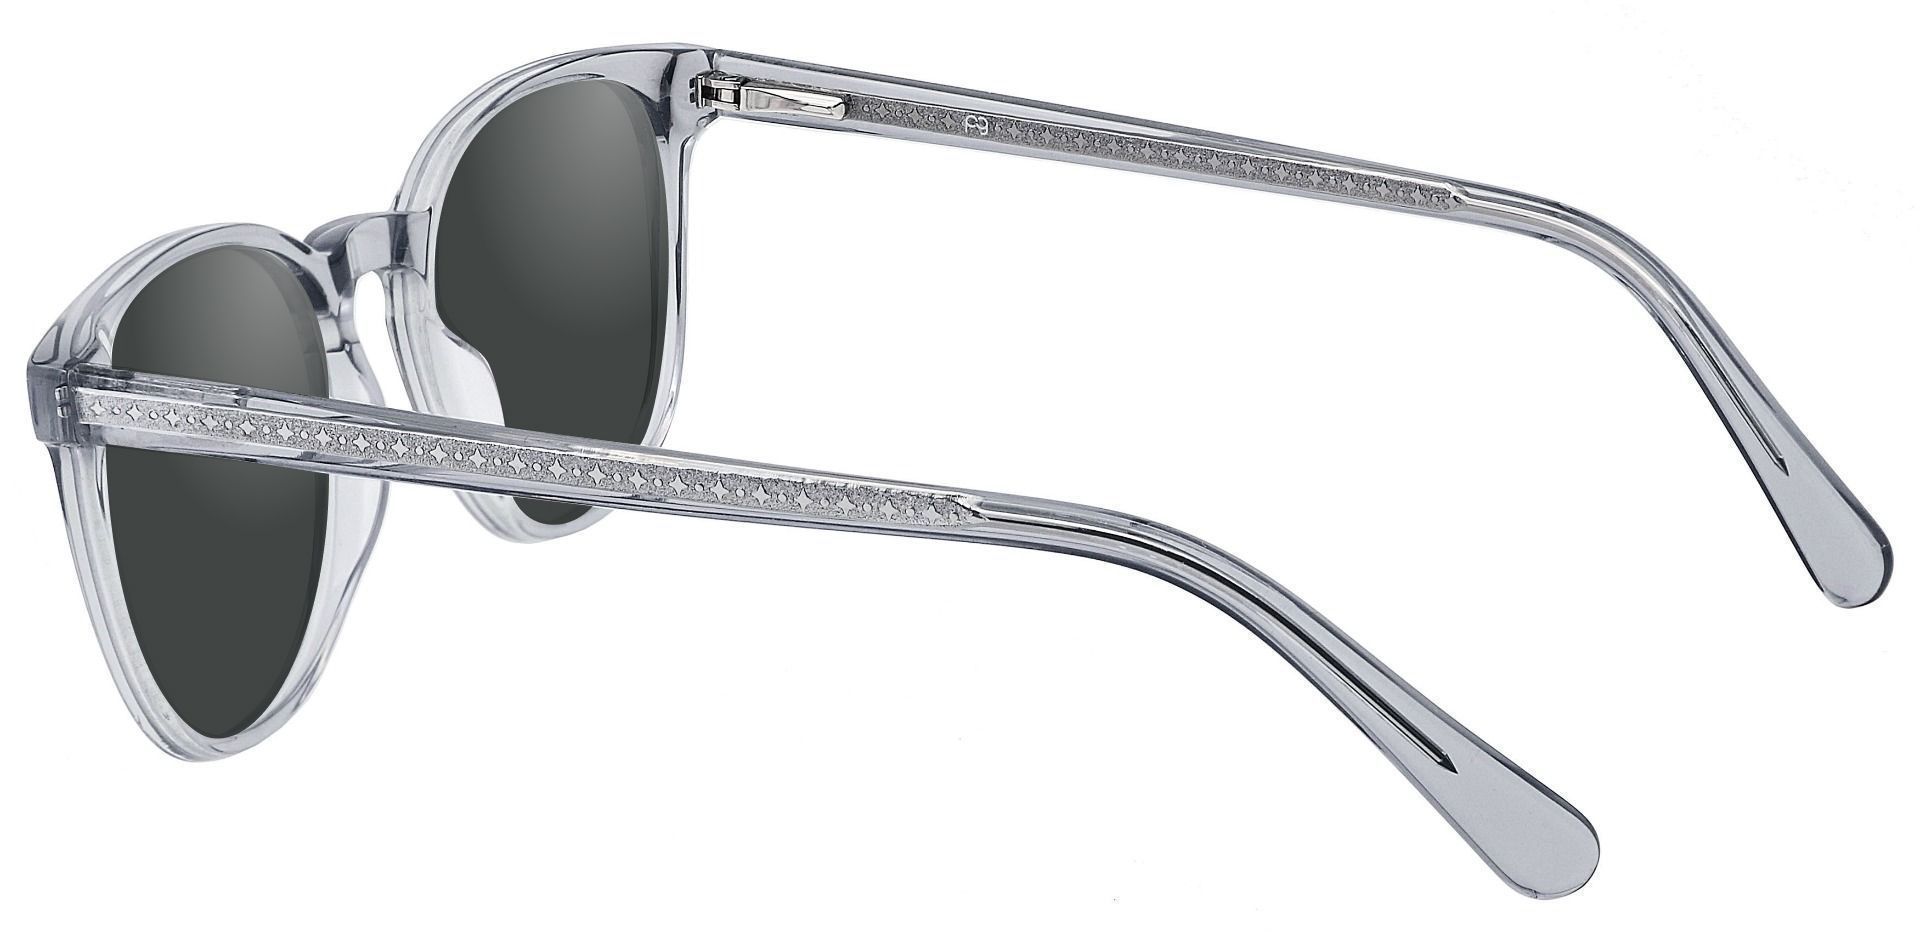 Nebula Round Prescription Sunglasses - Gray Frame With Gray Lenses